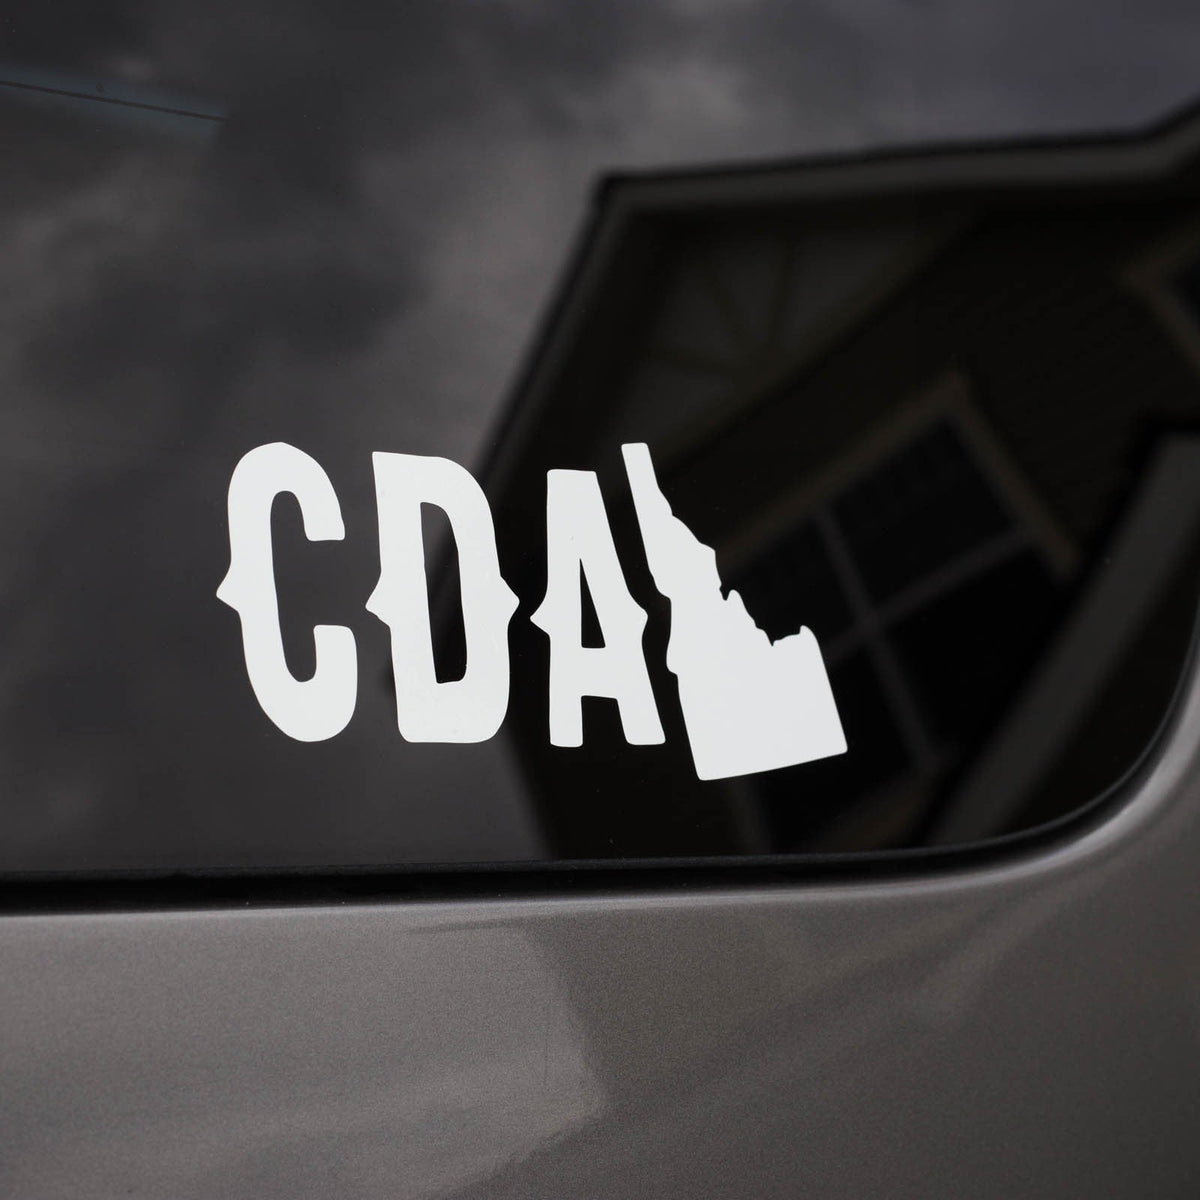 CDA Idaho State Alternate Decal